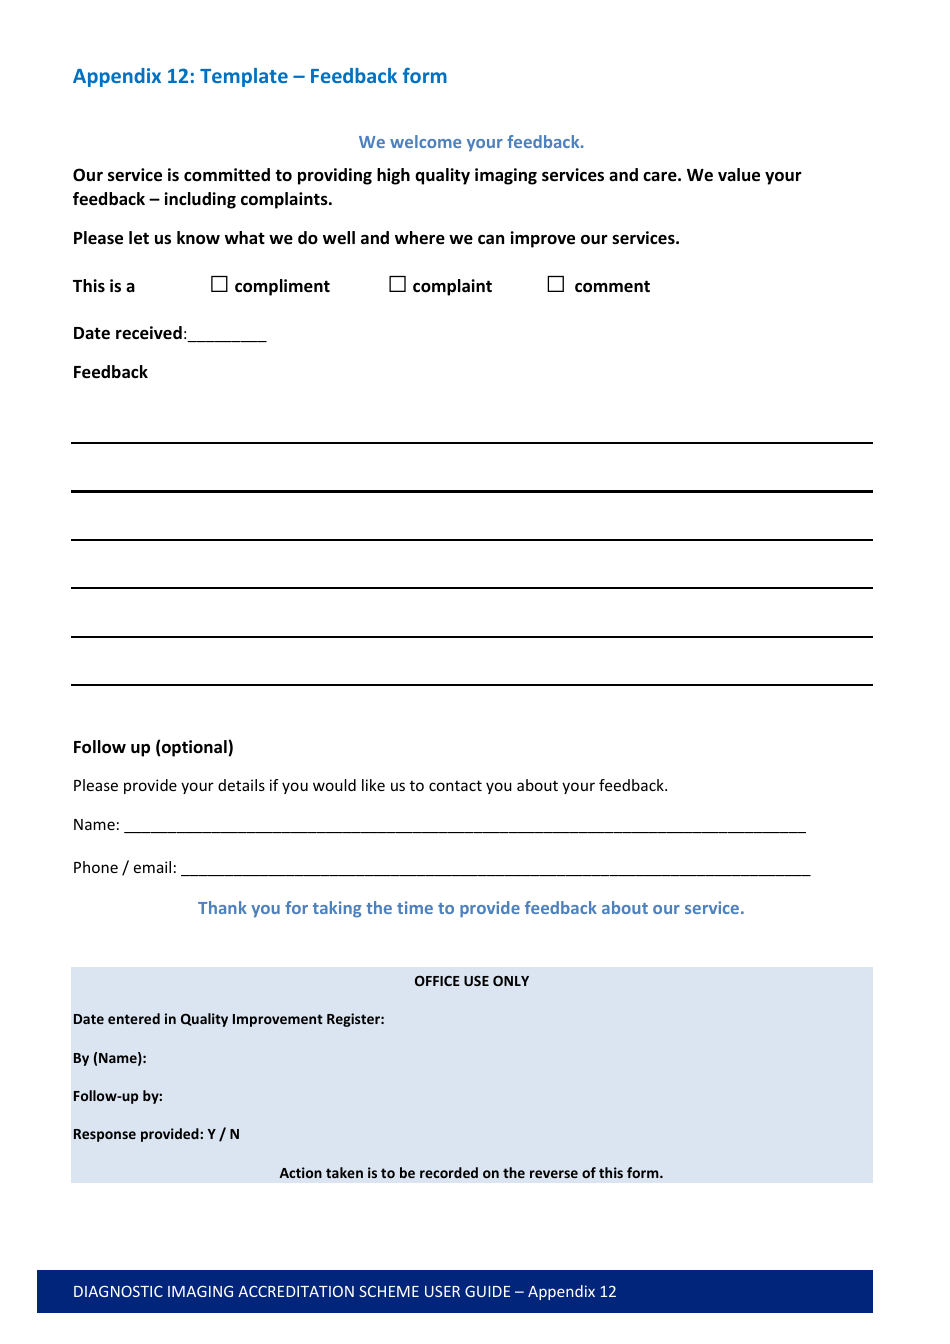 Appendix 12 Template - Feedback Form (Diagnostic Imaging Accreditation Scheme (Dias) User Guide) - Australia, Page 1